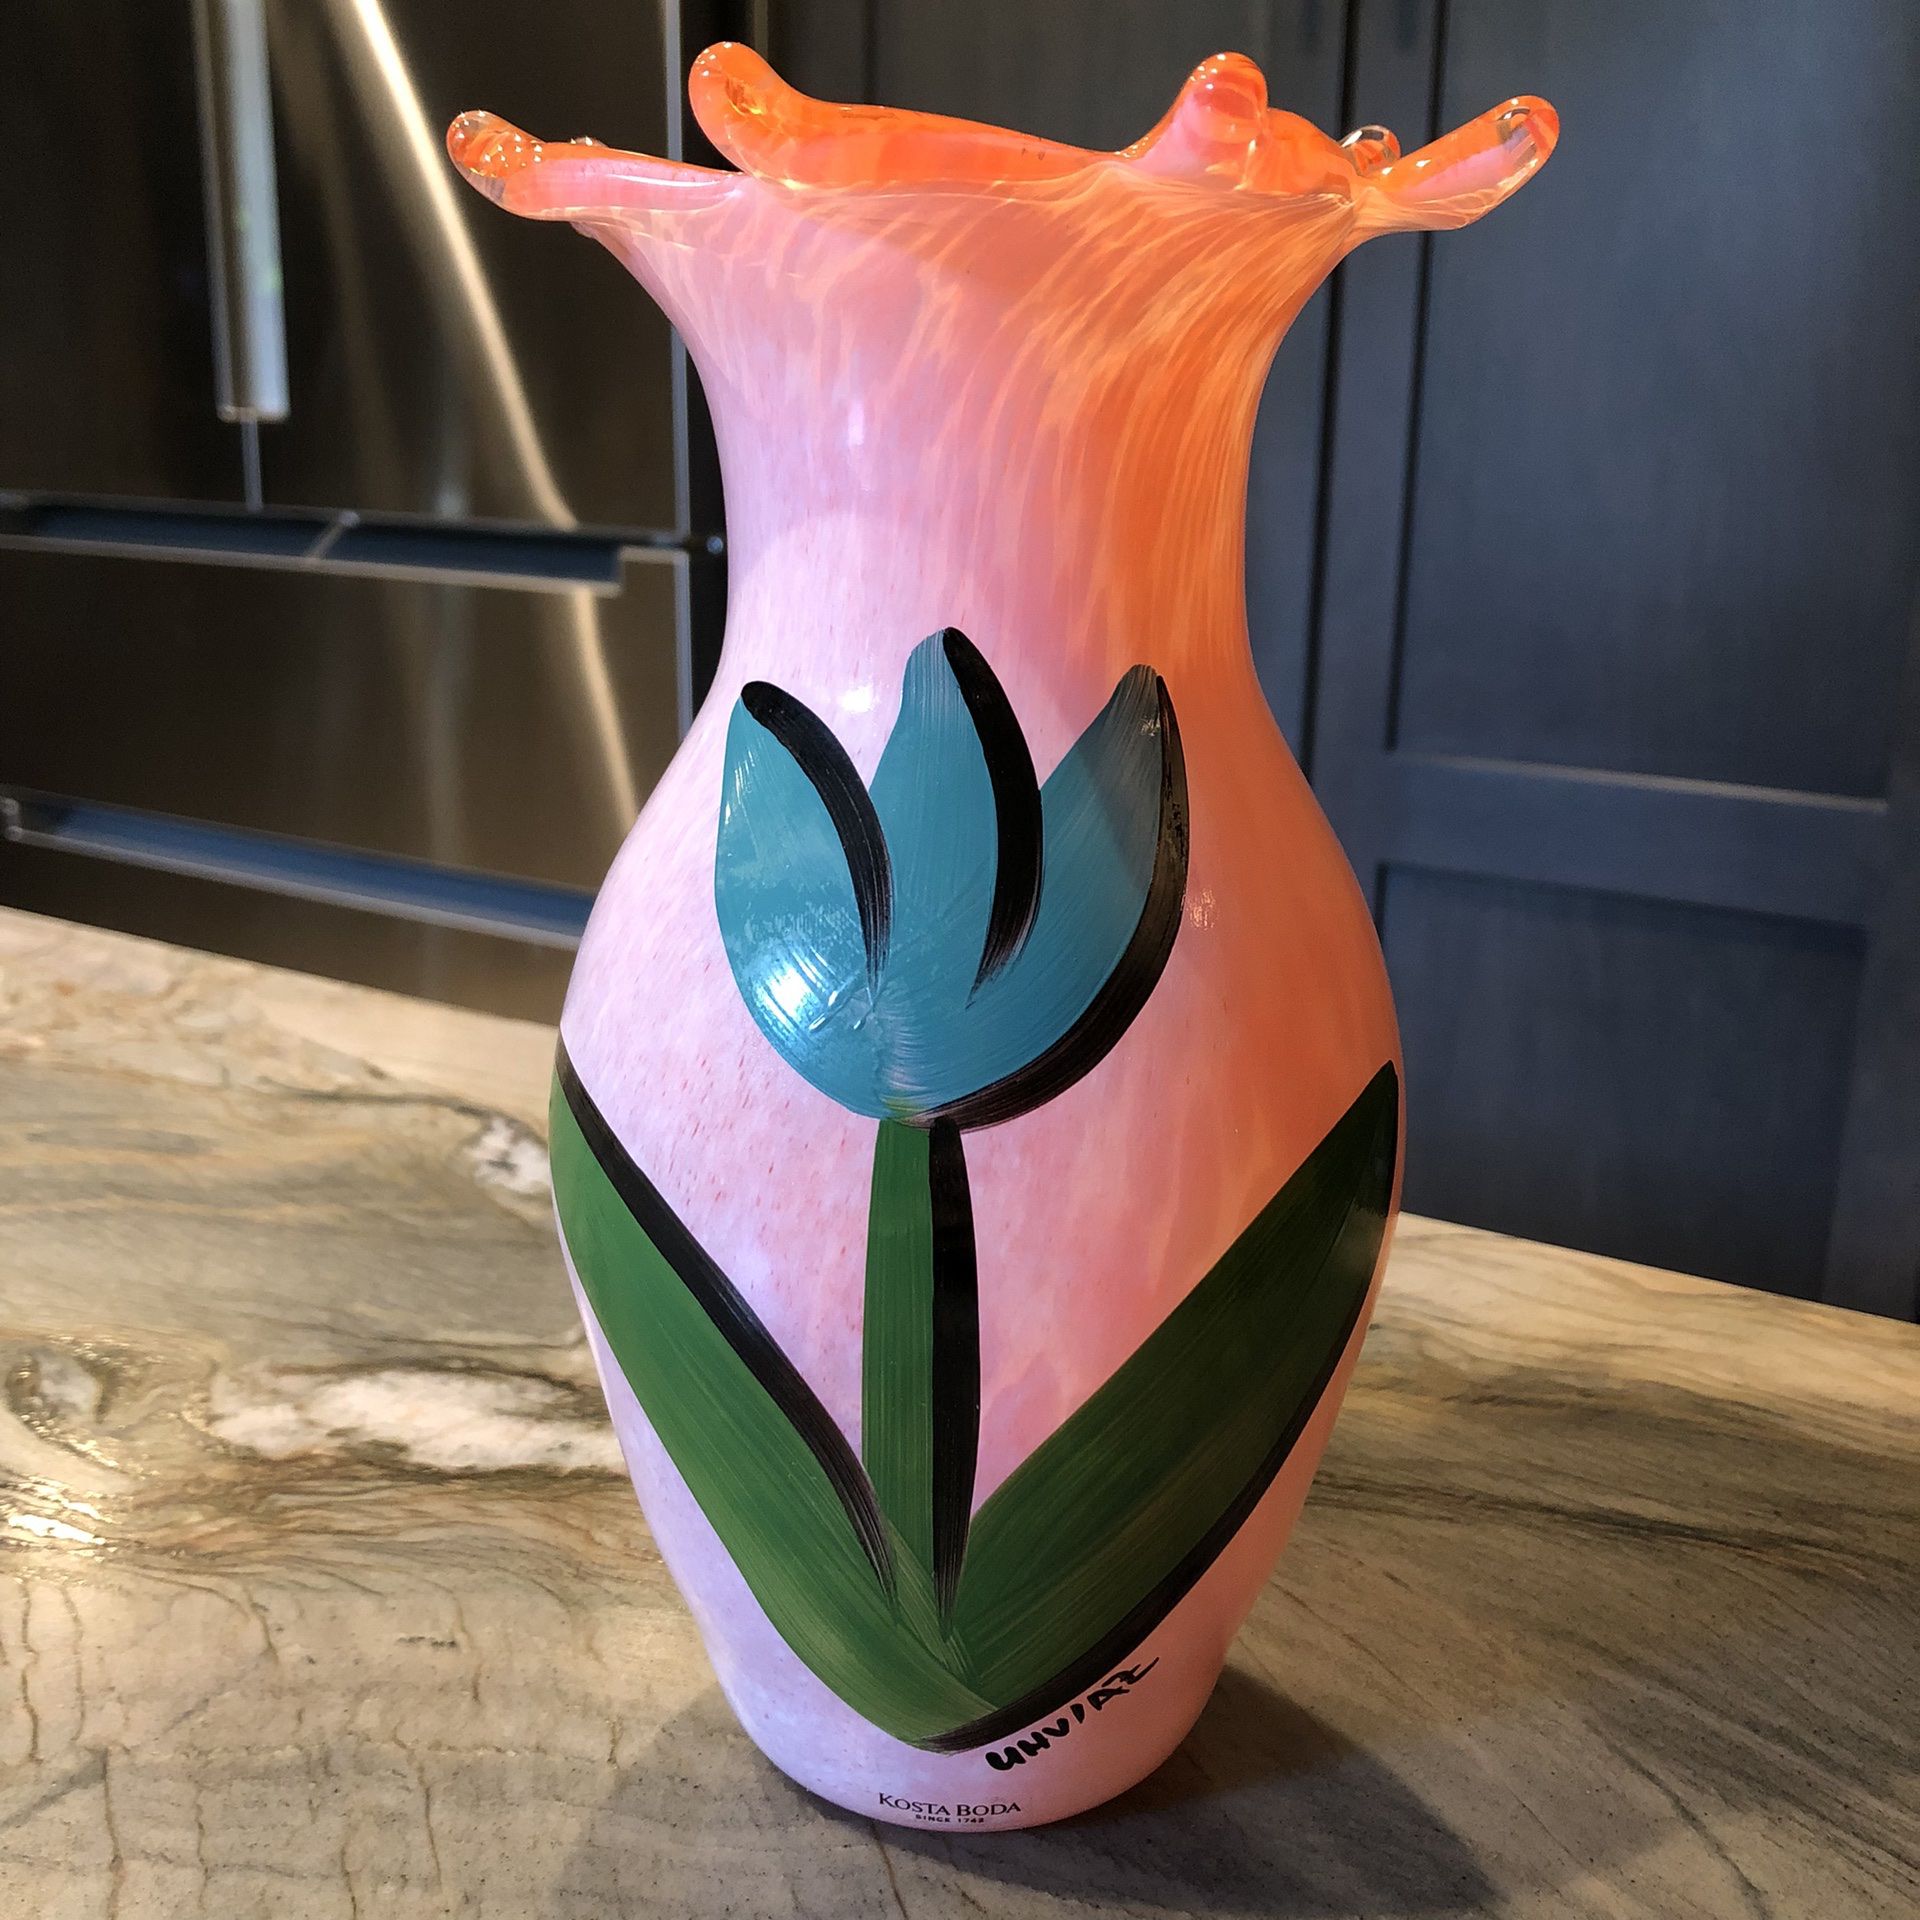 Kosta Boda Vintage Tulipa Vase by Ulrica Hydman-Vallien, model #40204.